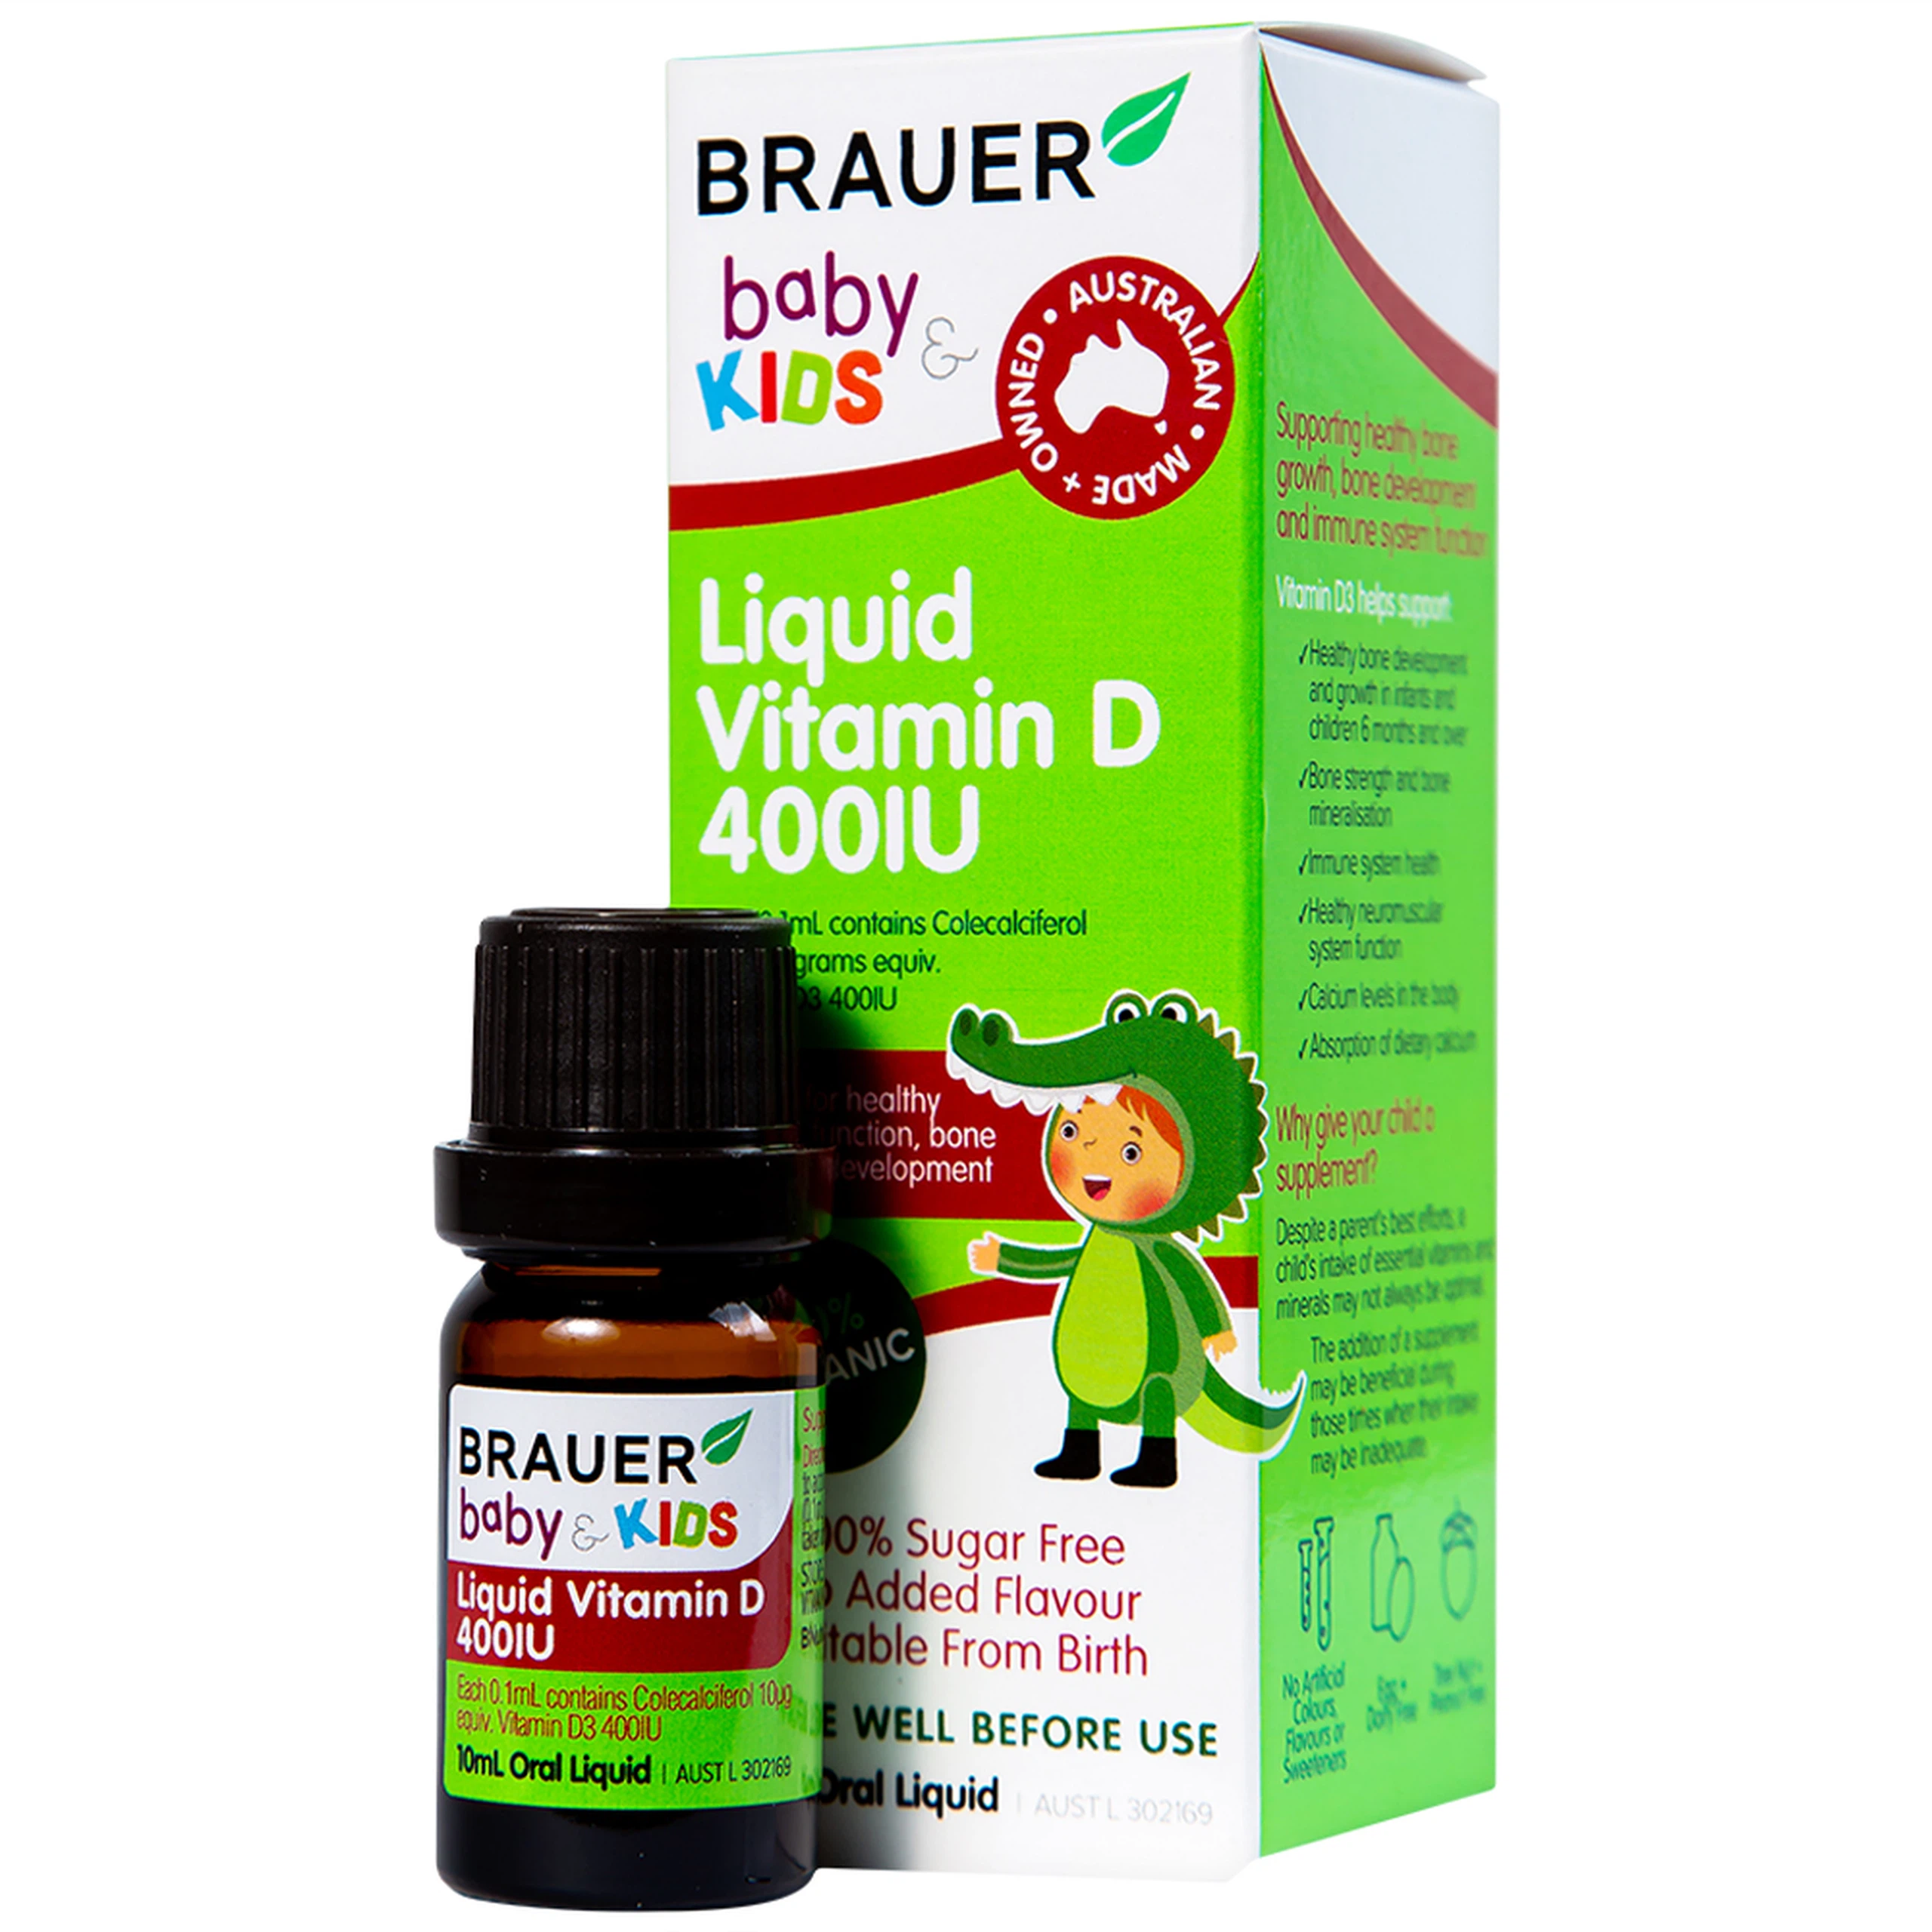 Siro Brauer Baby Kids Liquid Vitamin D 400IU bổ sung vitamin D3, tăng cường hấp thụ canxi (10ml)